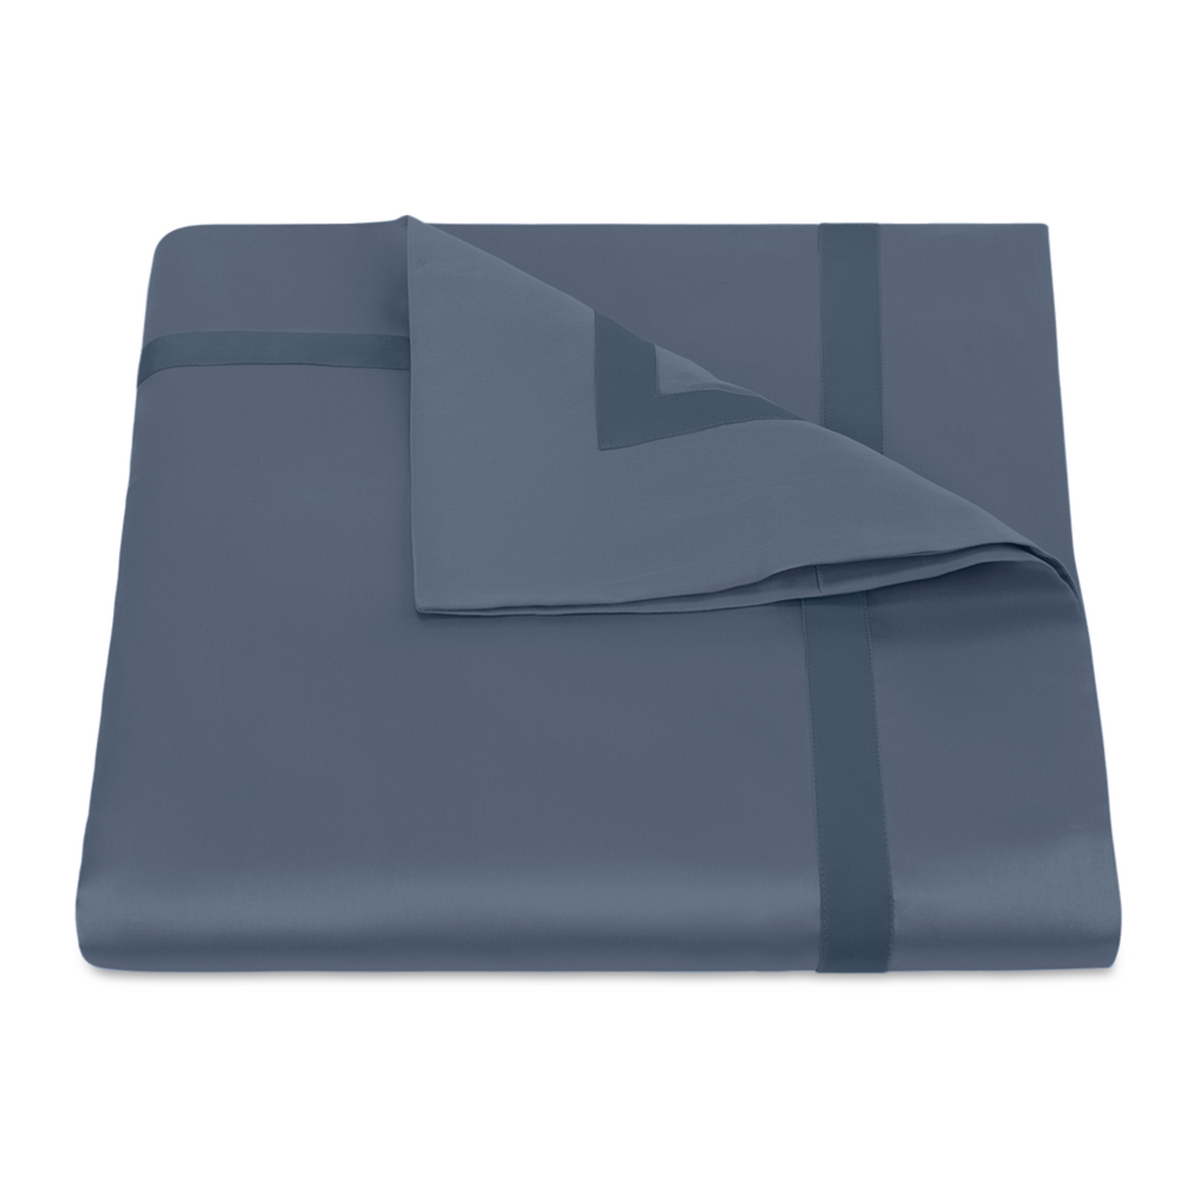 Duvet Cover of Matouk Nocturne Bedding in Steel Blue Color